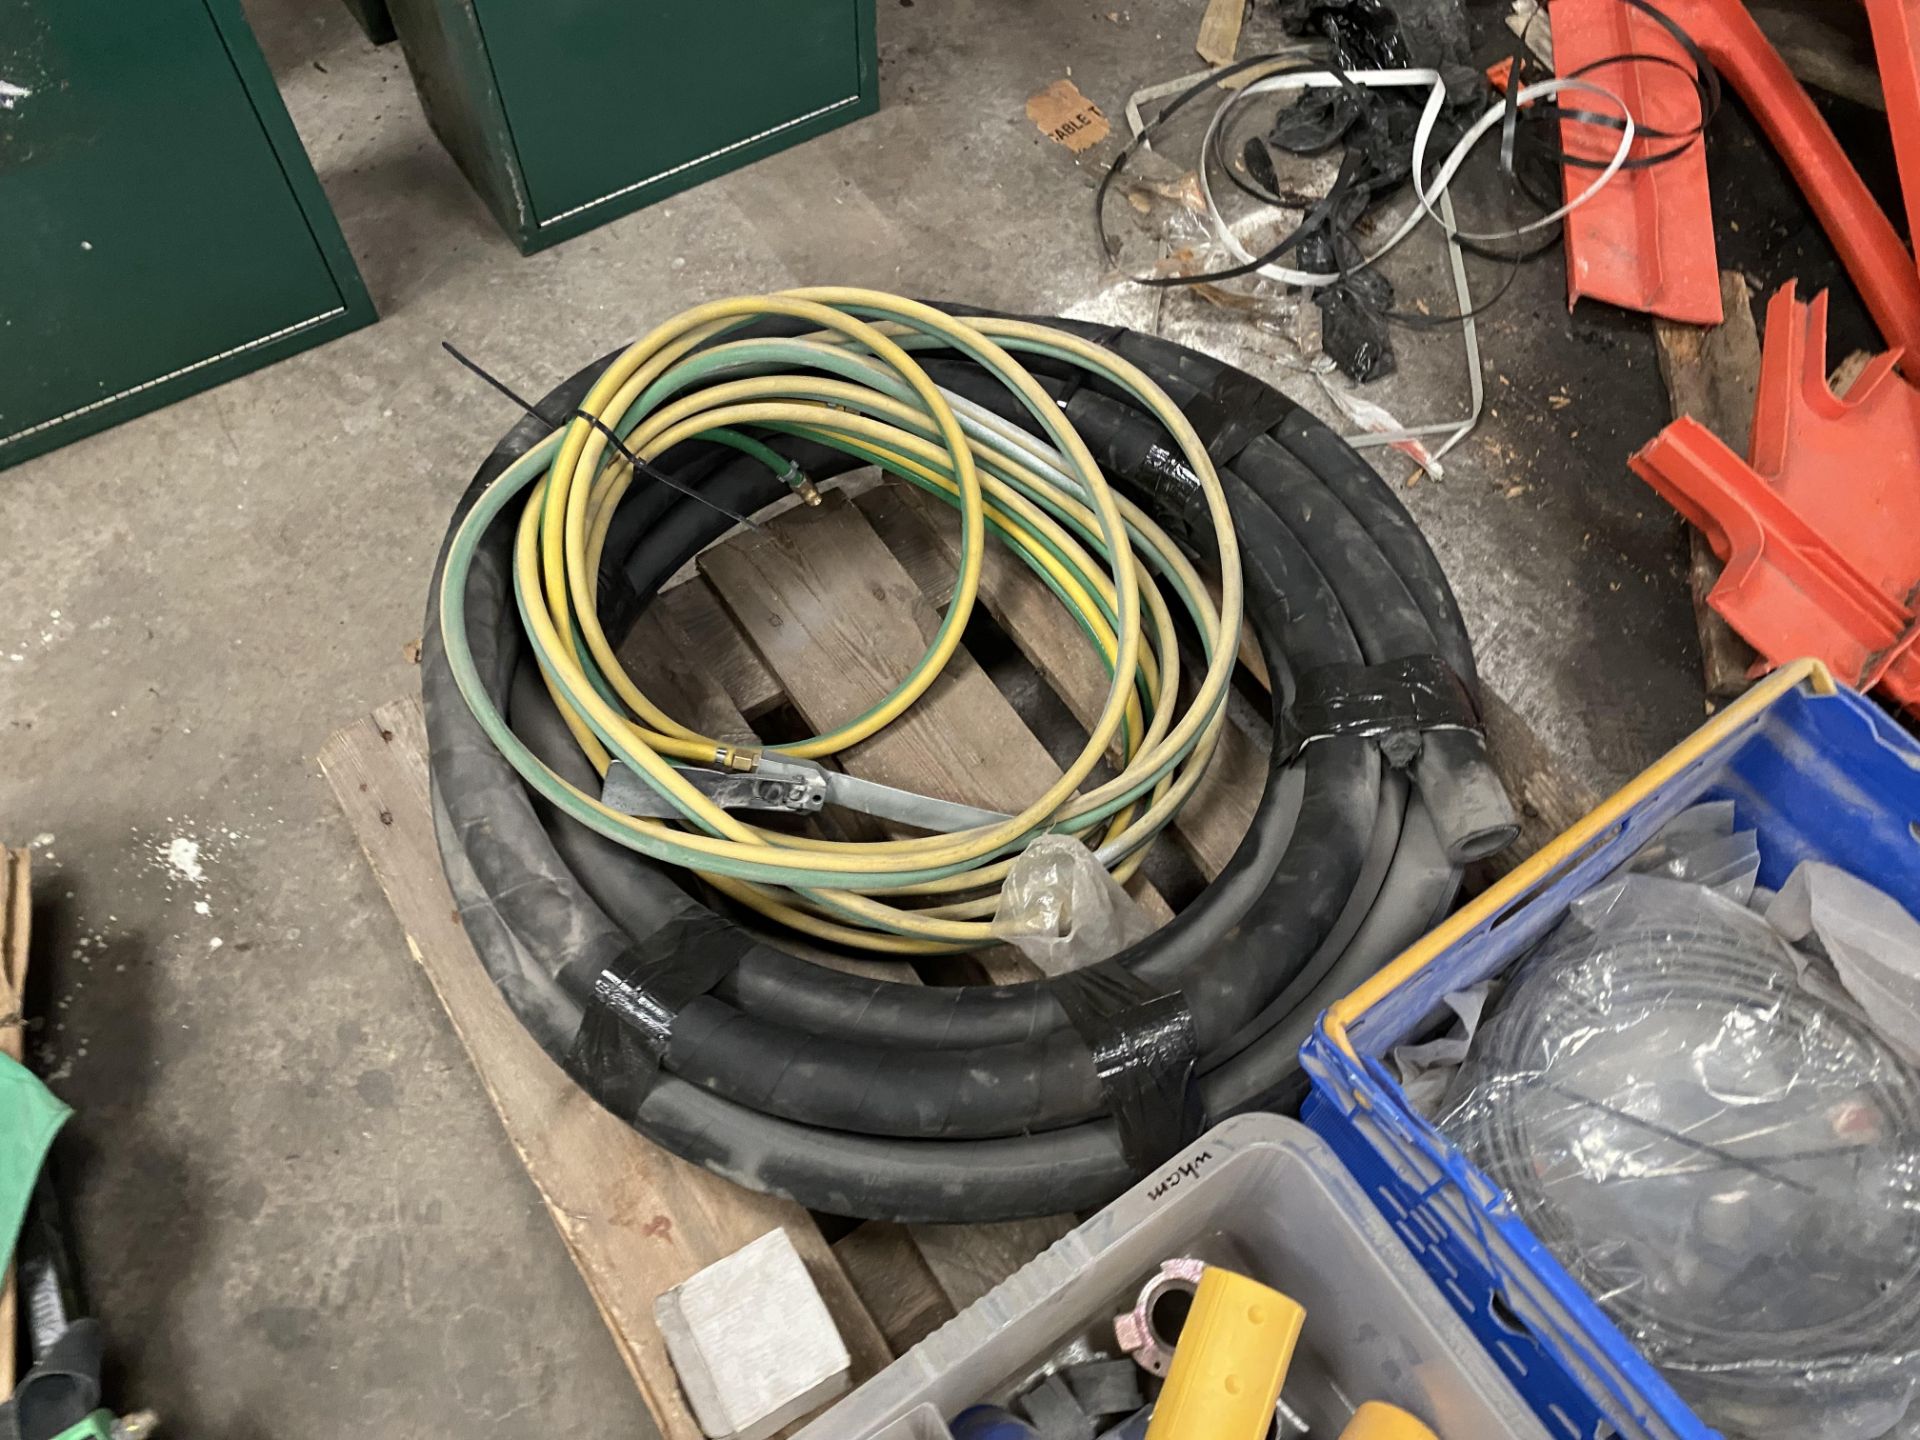 Assorted Shot Blasting Equipment, including hose, - Image 3 of 3